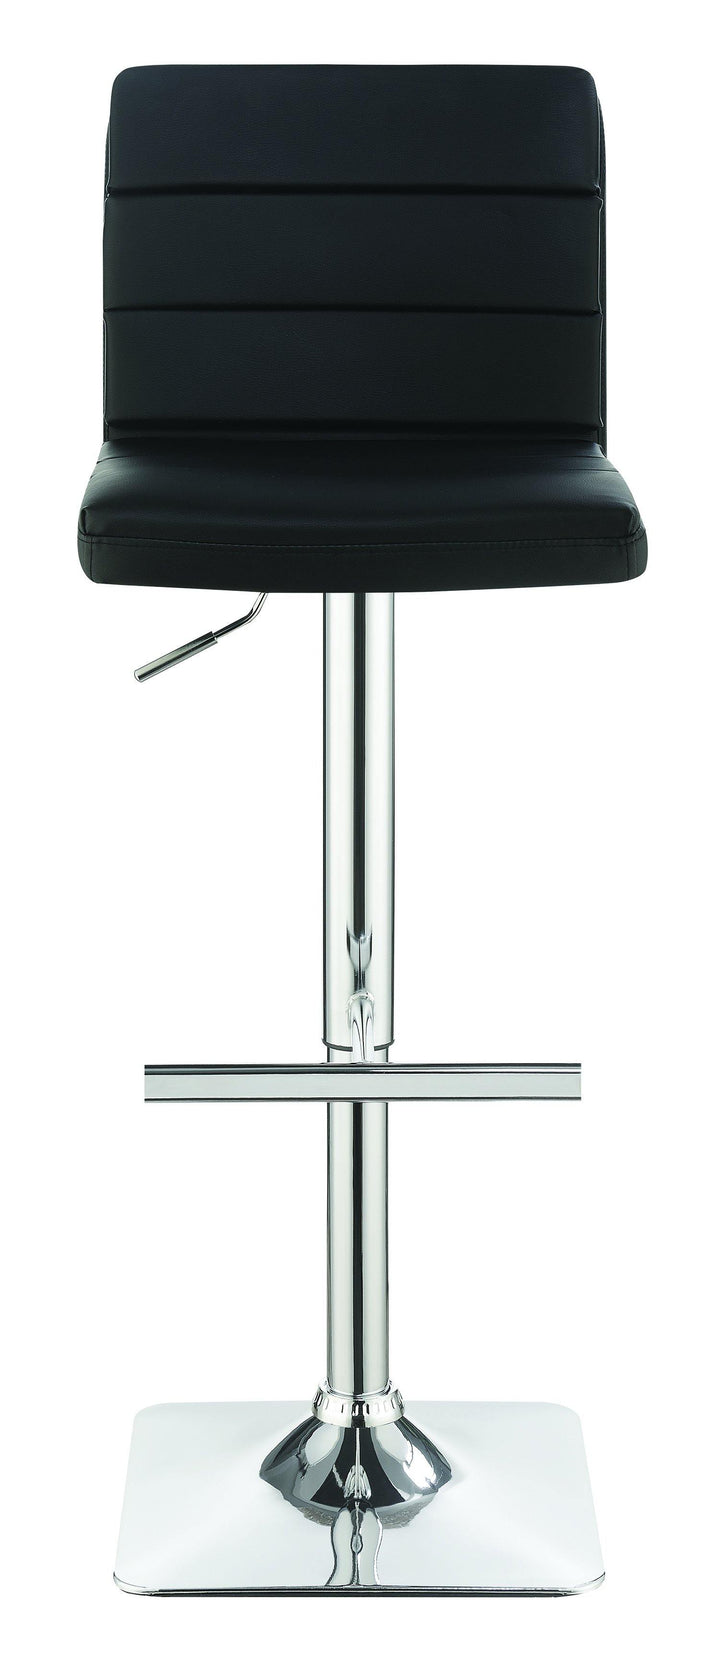 Rec room/bar stools: height adjustable 120695 Black Contemporary adjustable bar stool By coaster - sofafair.com